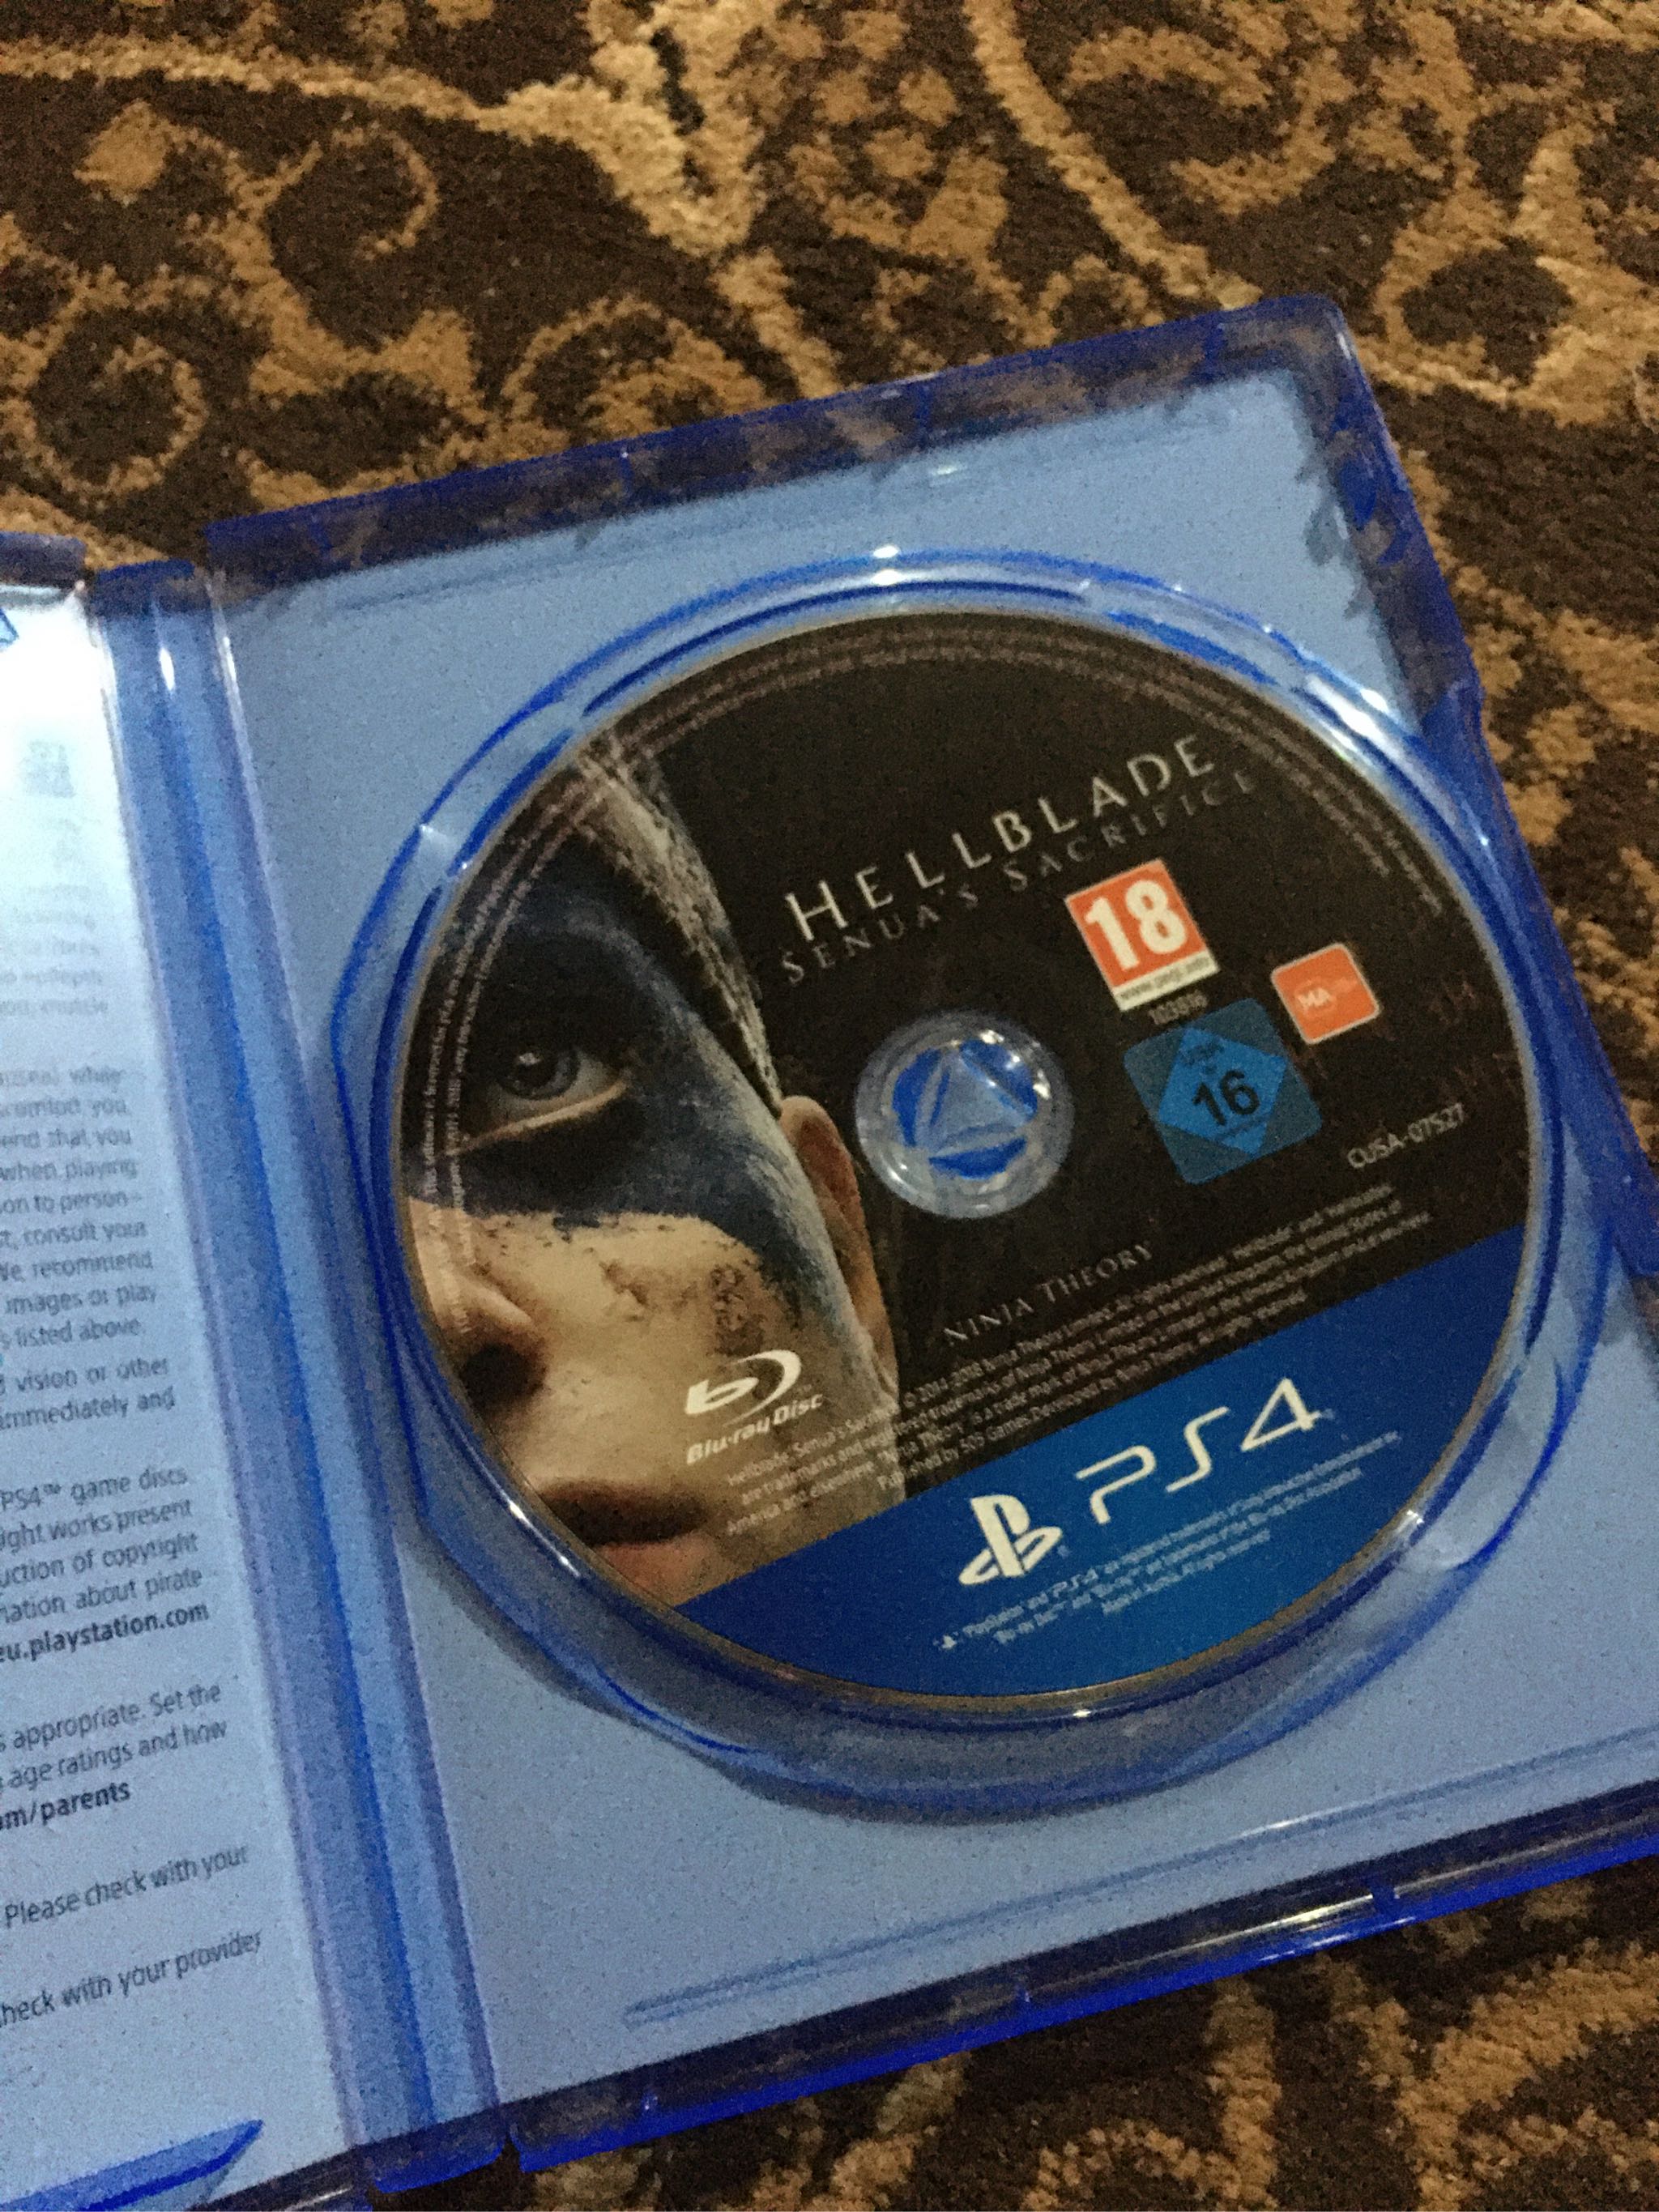 PS4 Hellblade Senuas Sacrifice(R2)(English) PS4 Games